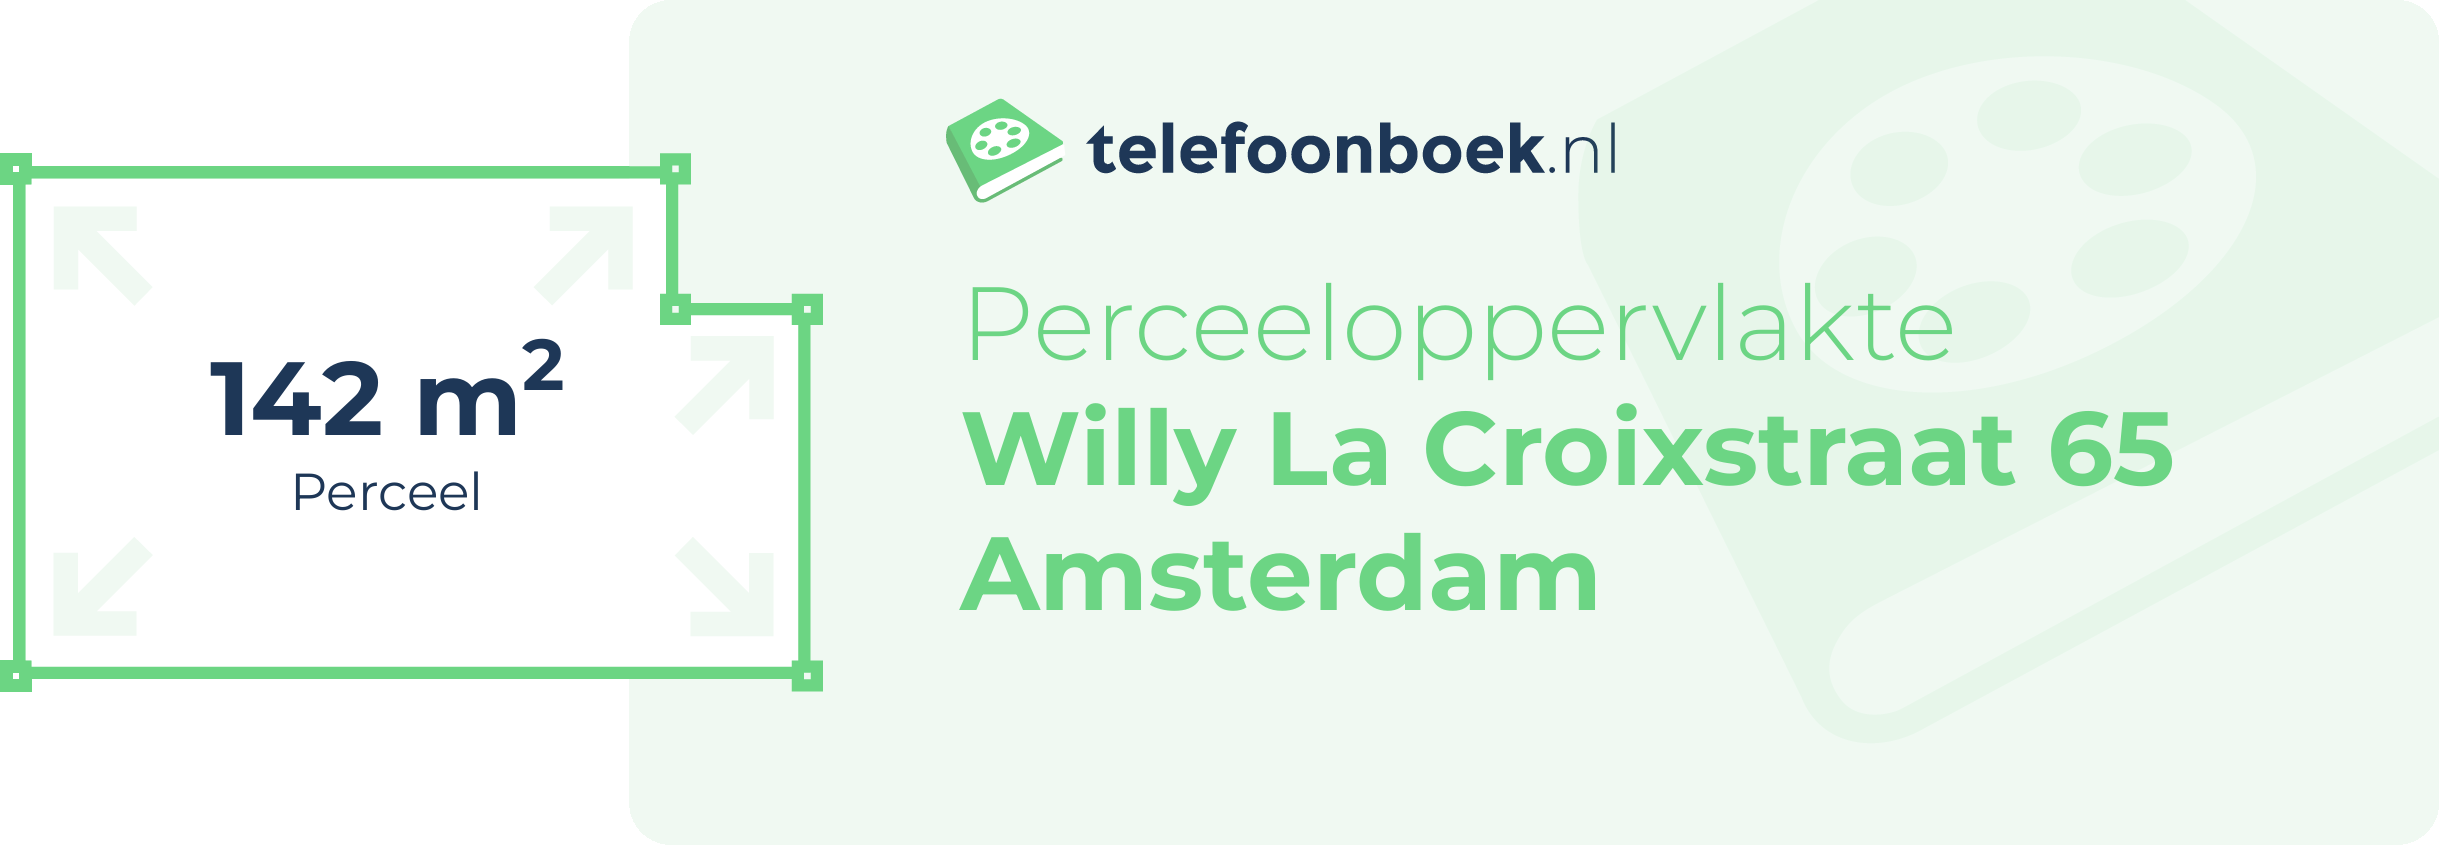 Perceeloppervlakte Willy La Croixstraat 65 Amsterdam